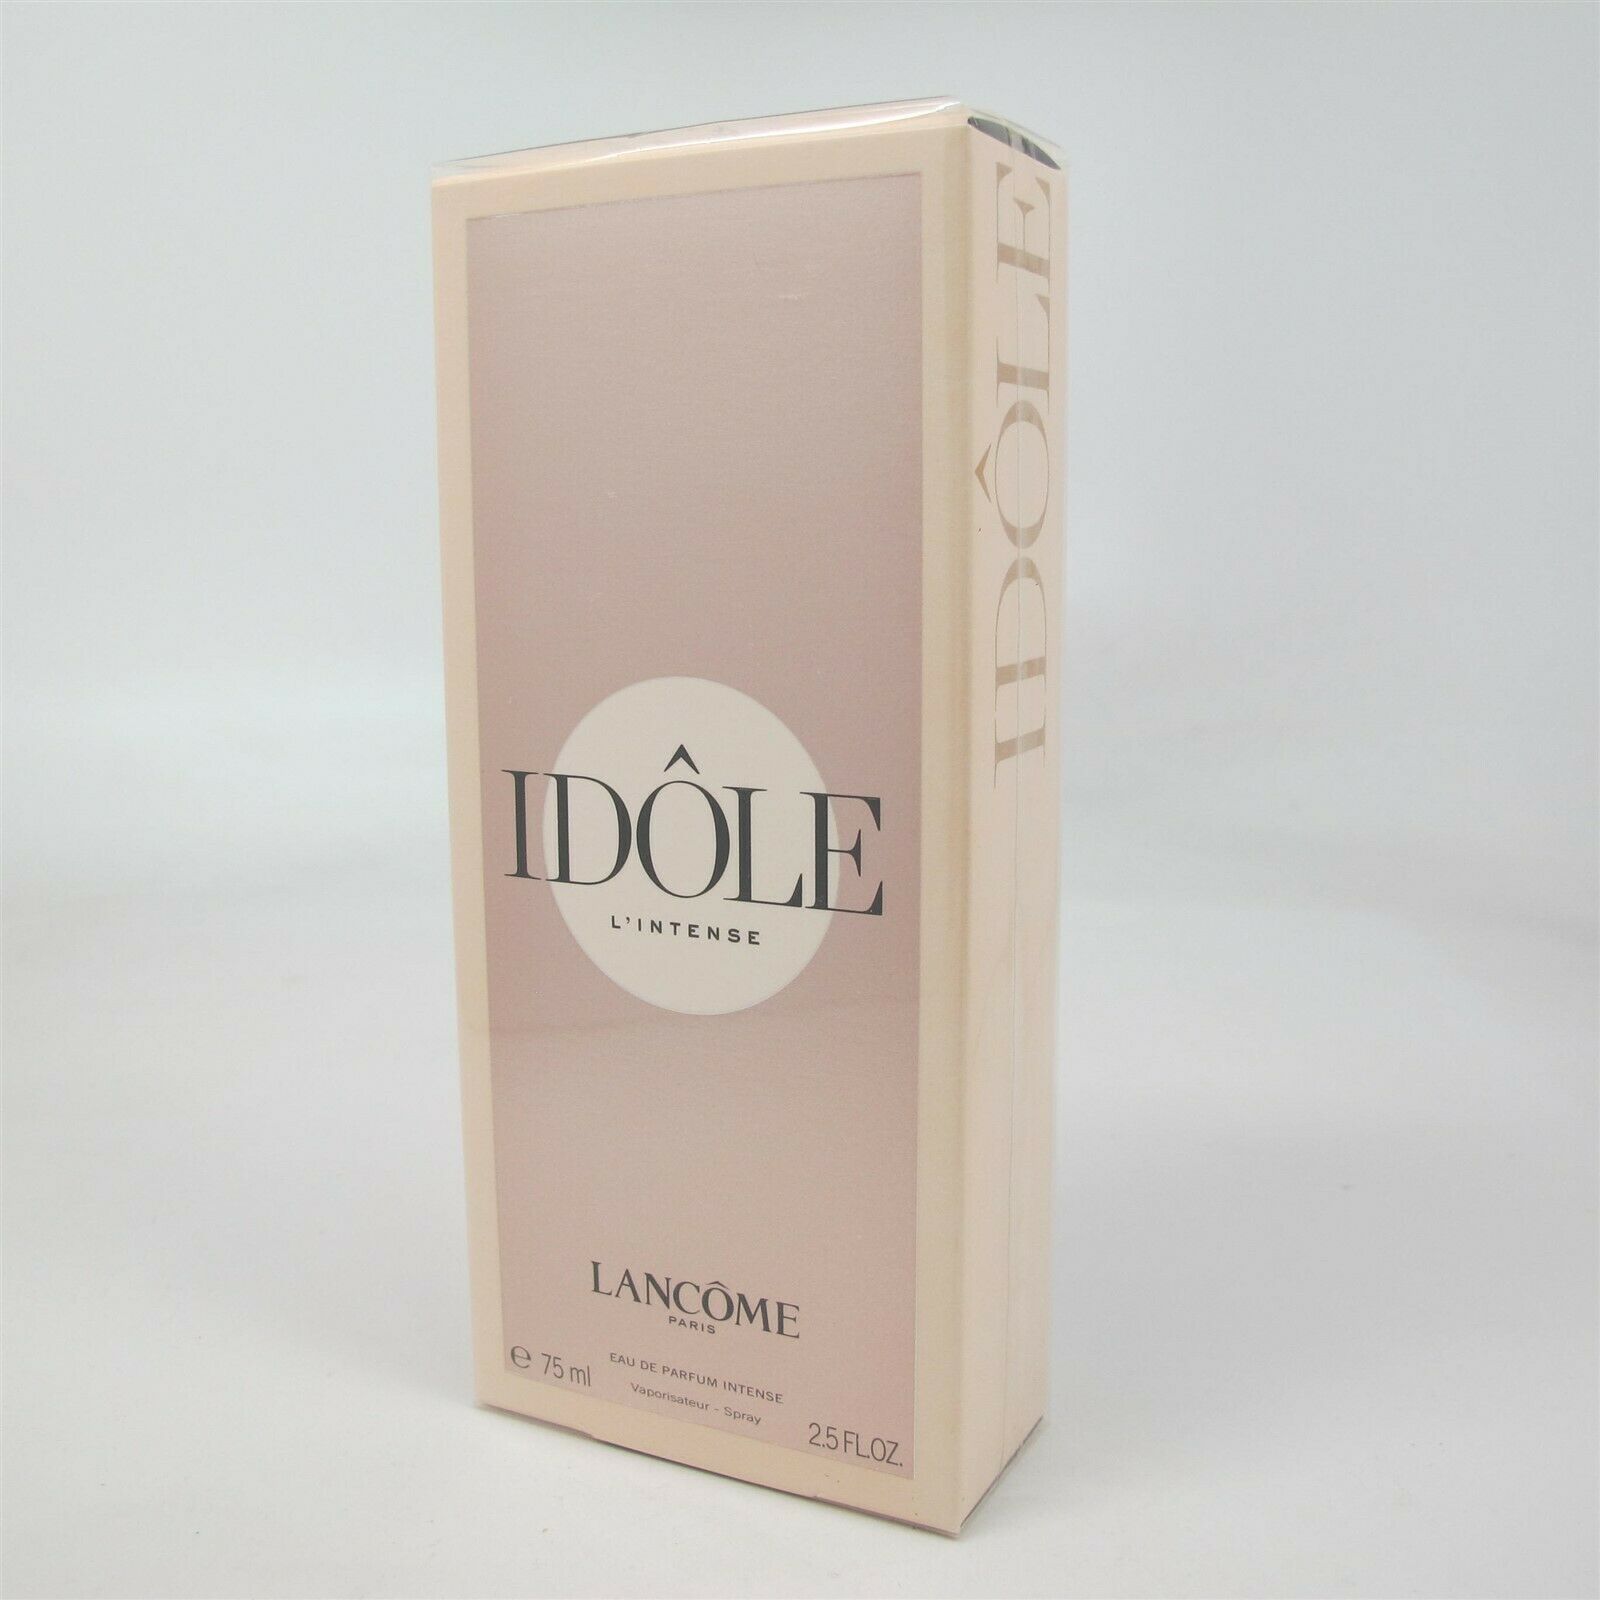 Primary image for IDOLE L'INTENSE by Lancome 75 ml/ 2.5 oz Eau de Parfum Intense Spray NIB